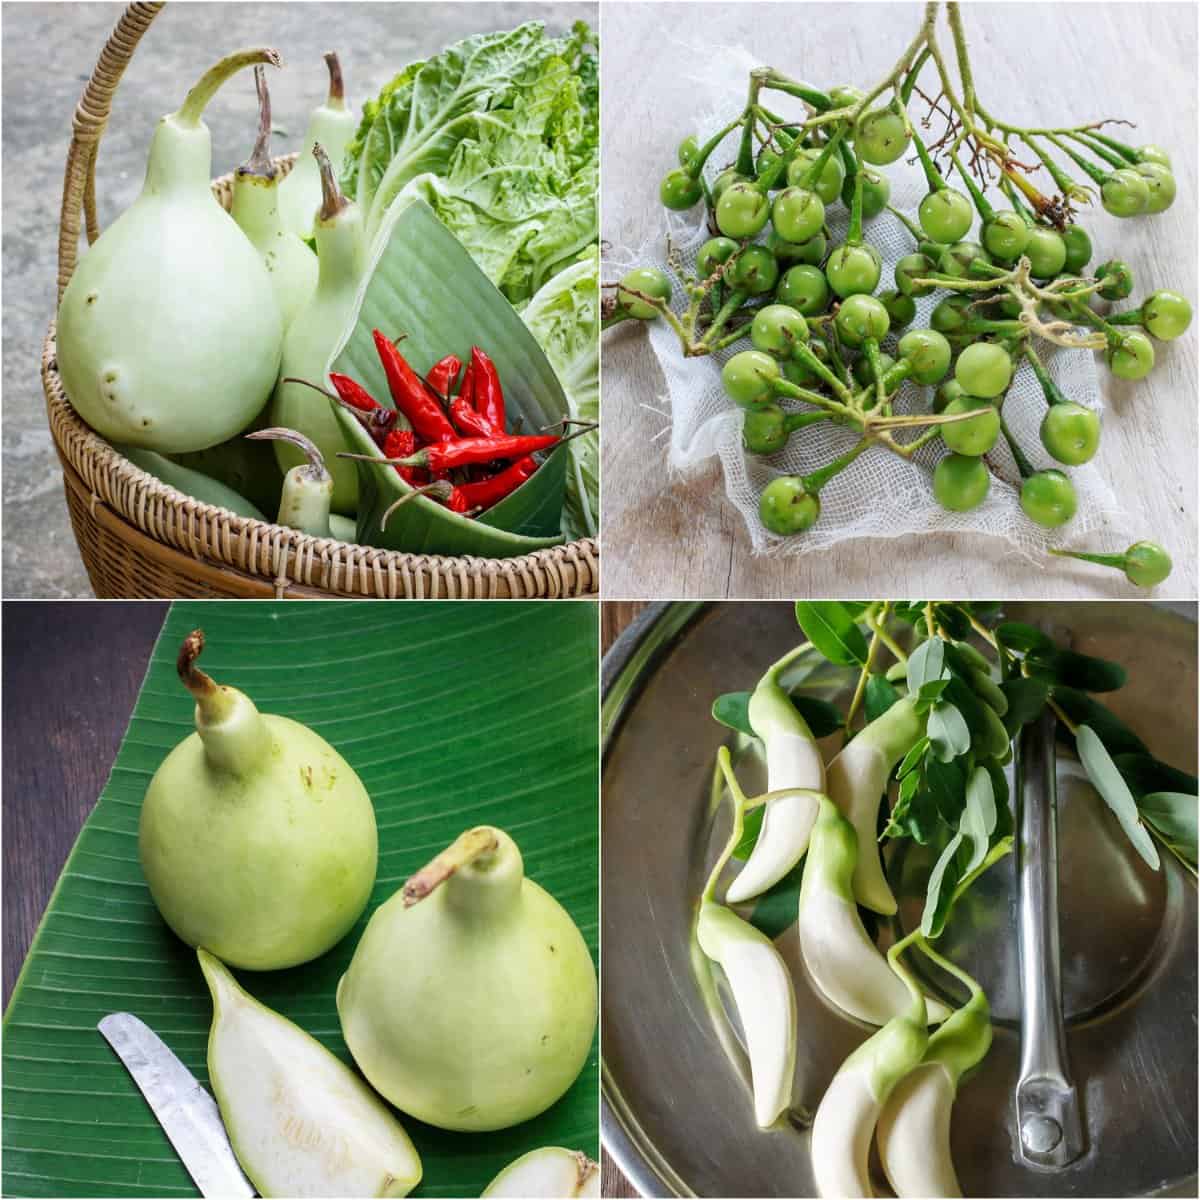 Asian vegetables